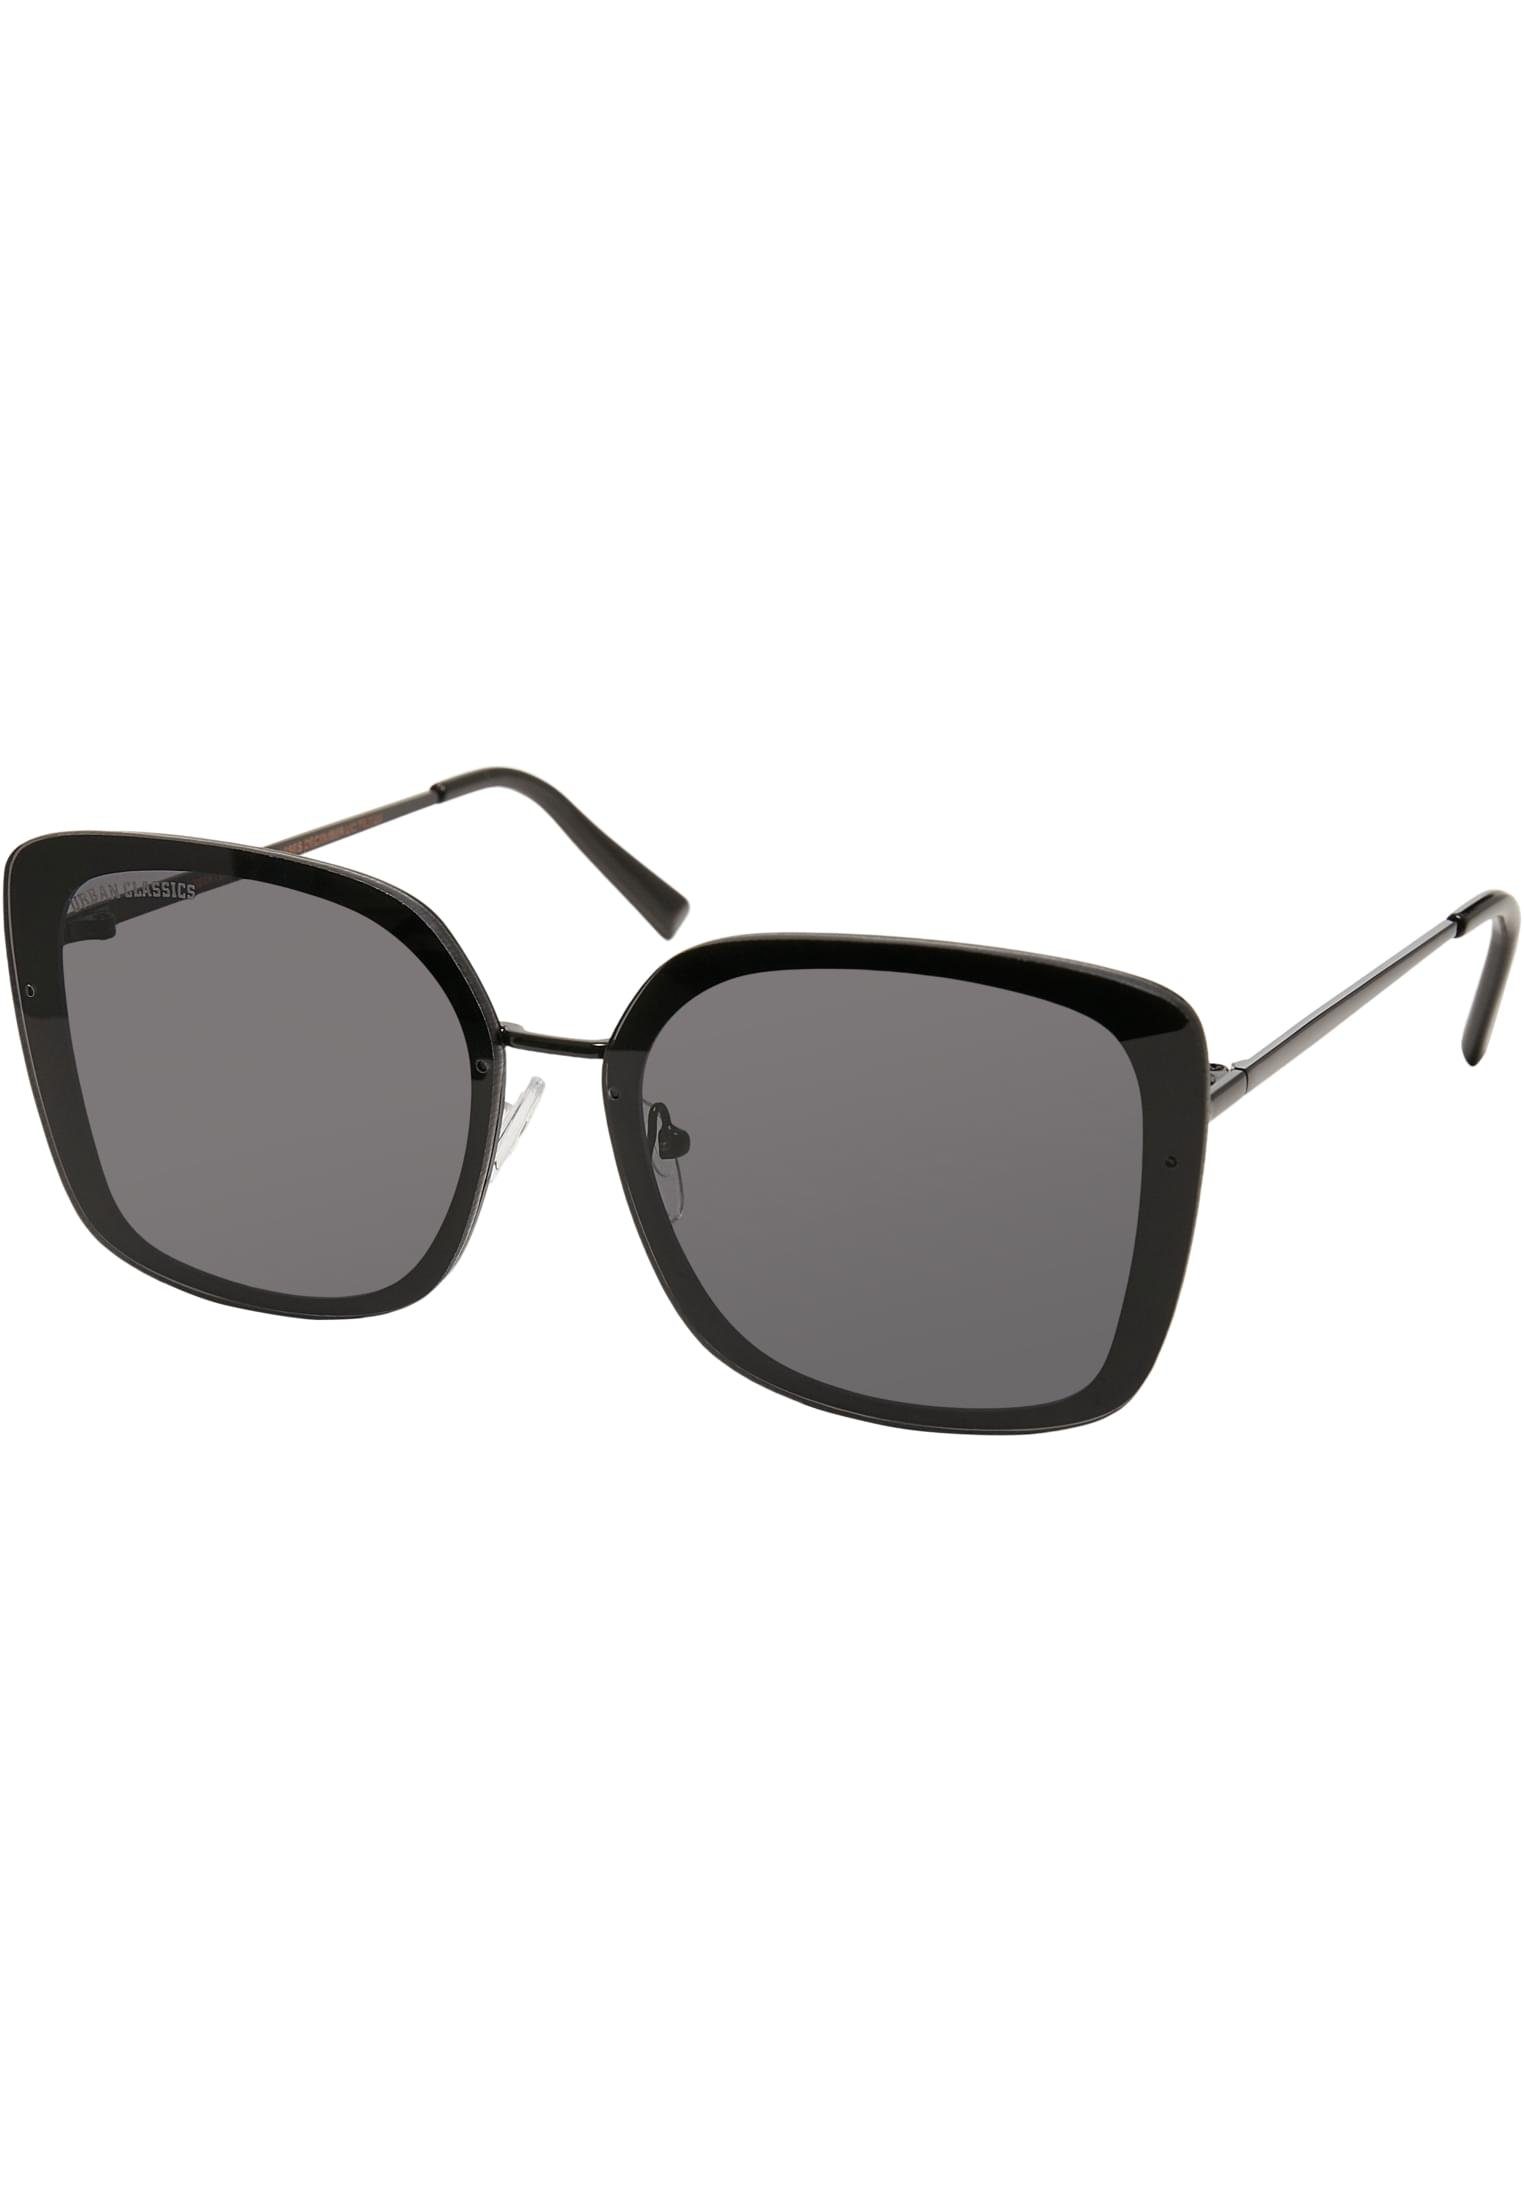 URBAN CLASSICS December UC Sonnenbrille black Sunglasses Accessoires